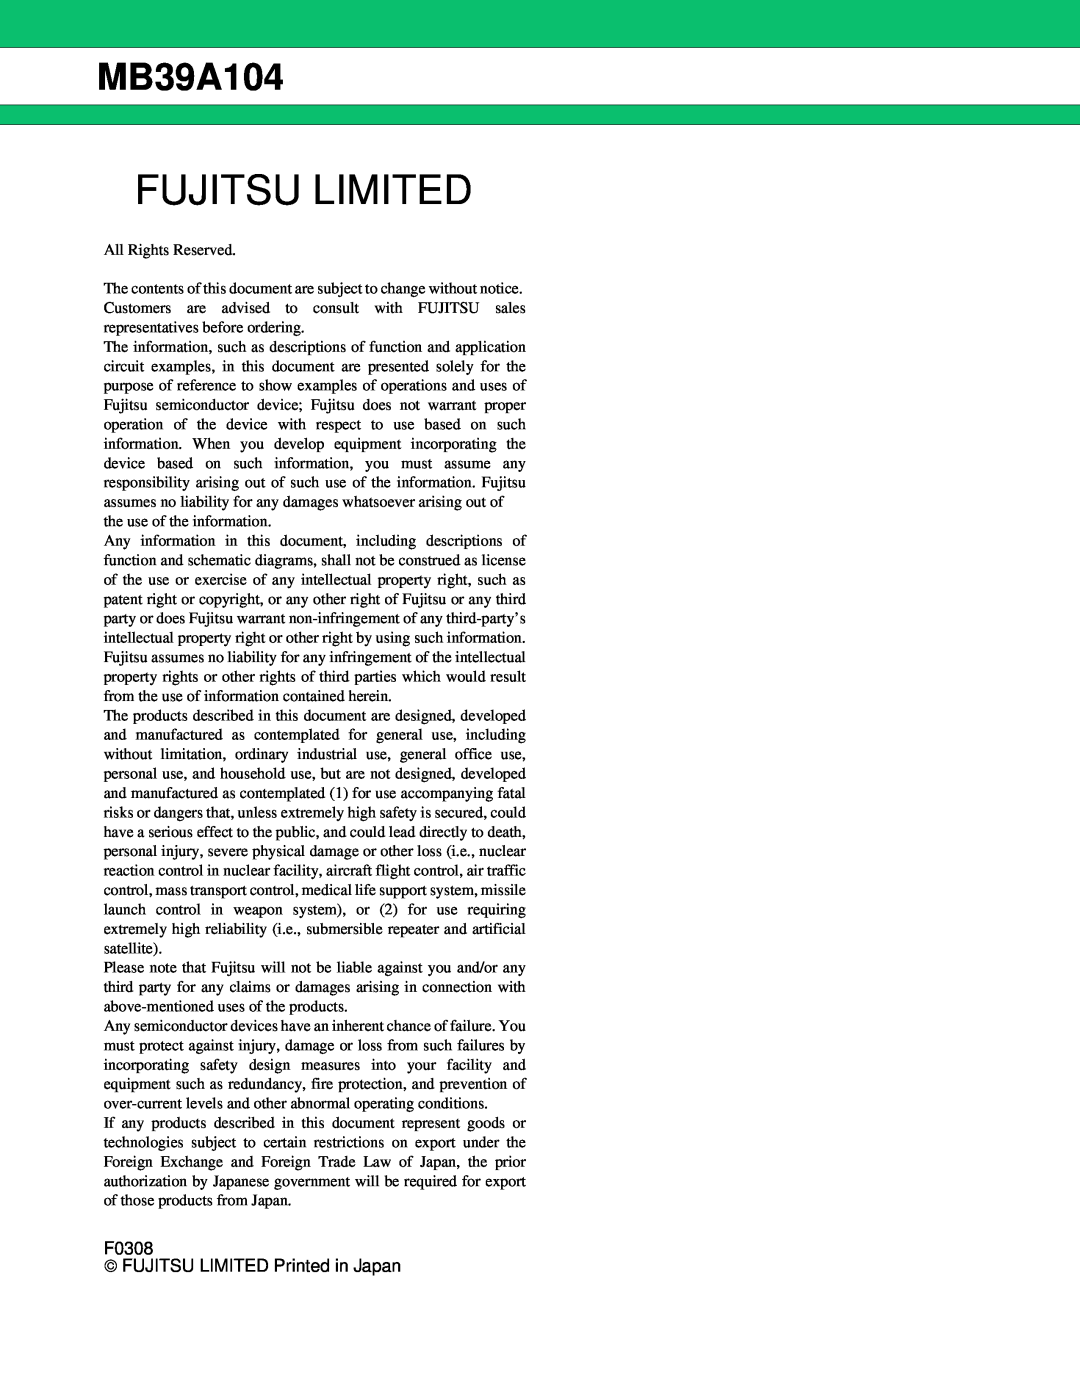 Fujitsu MB39A104 manual Fujitsu Limited, F0308  FUJITSU LIMITED Printed in Japan 